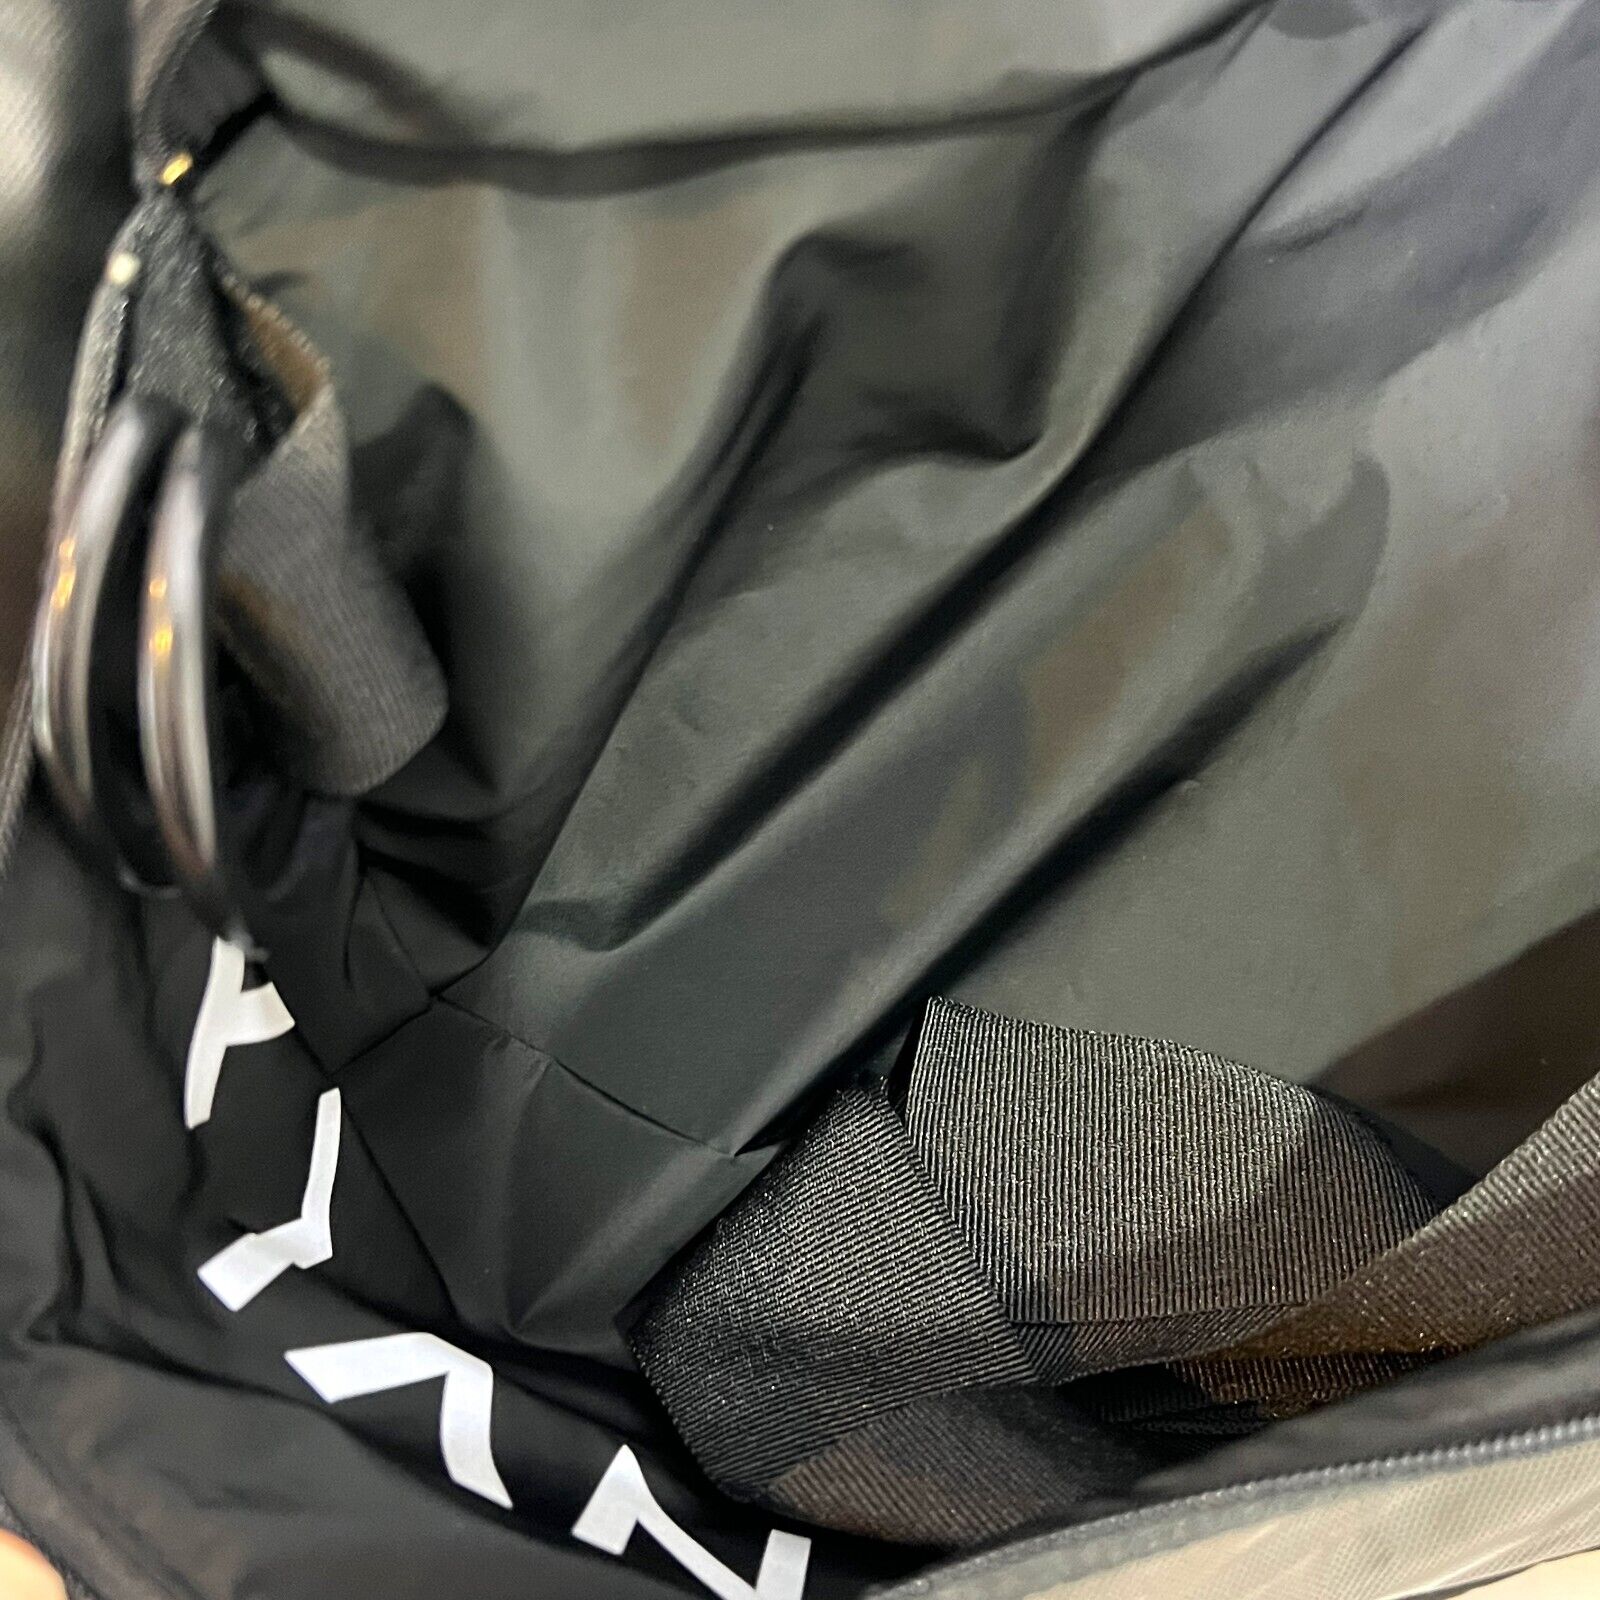 NVLT Black Reflective Packable Cropped Travel Jacket Size Medium